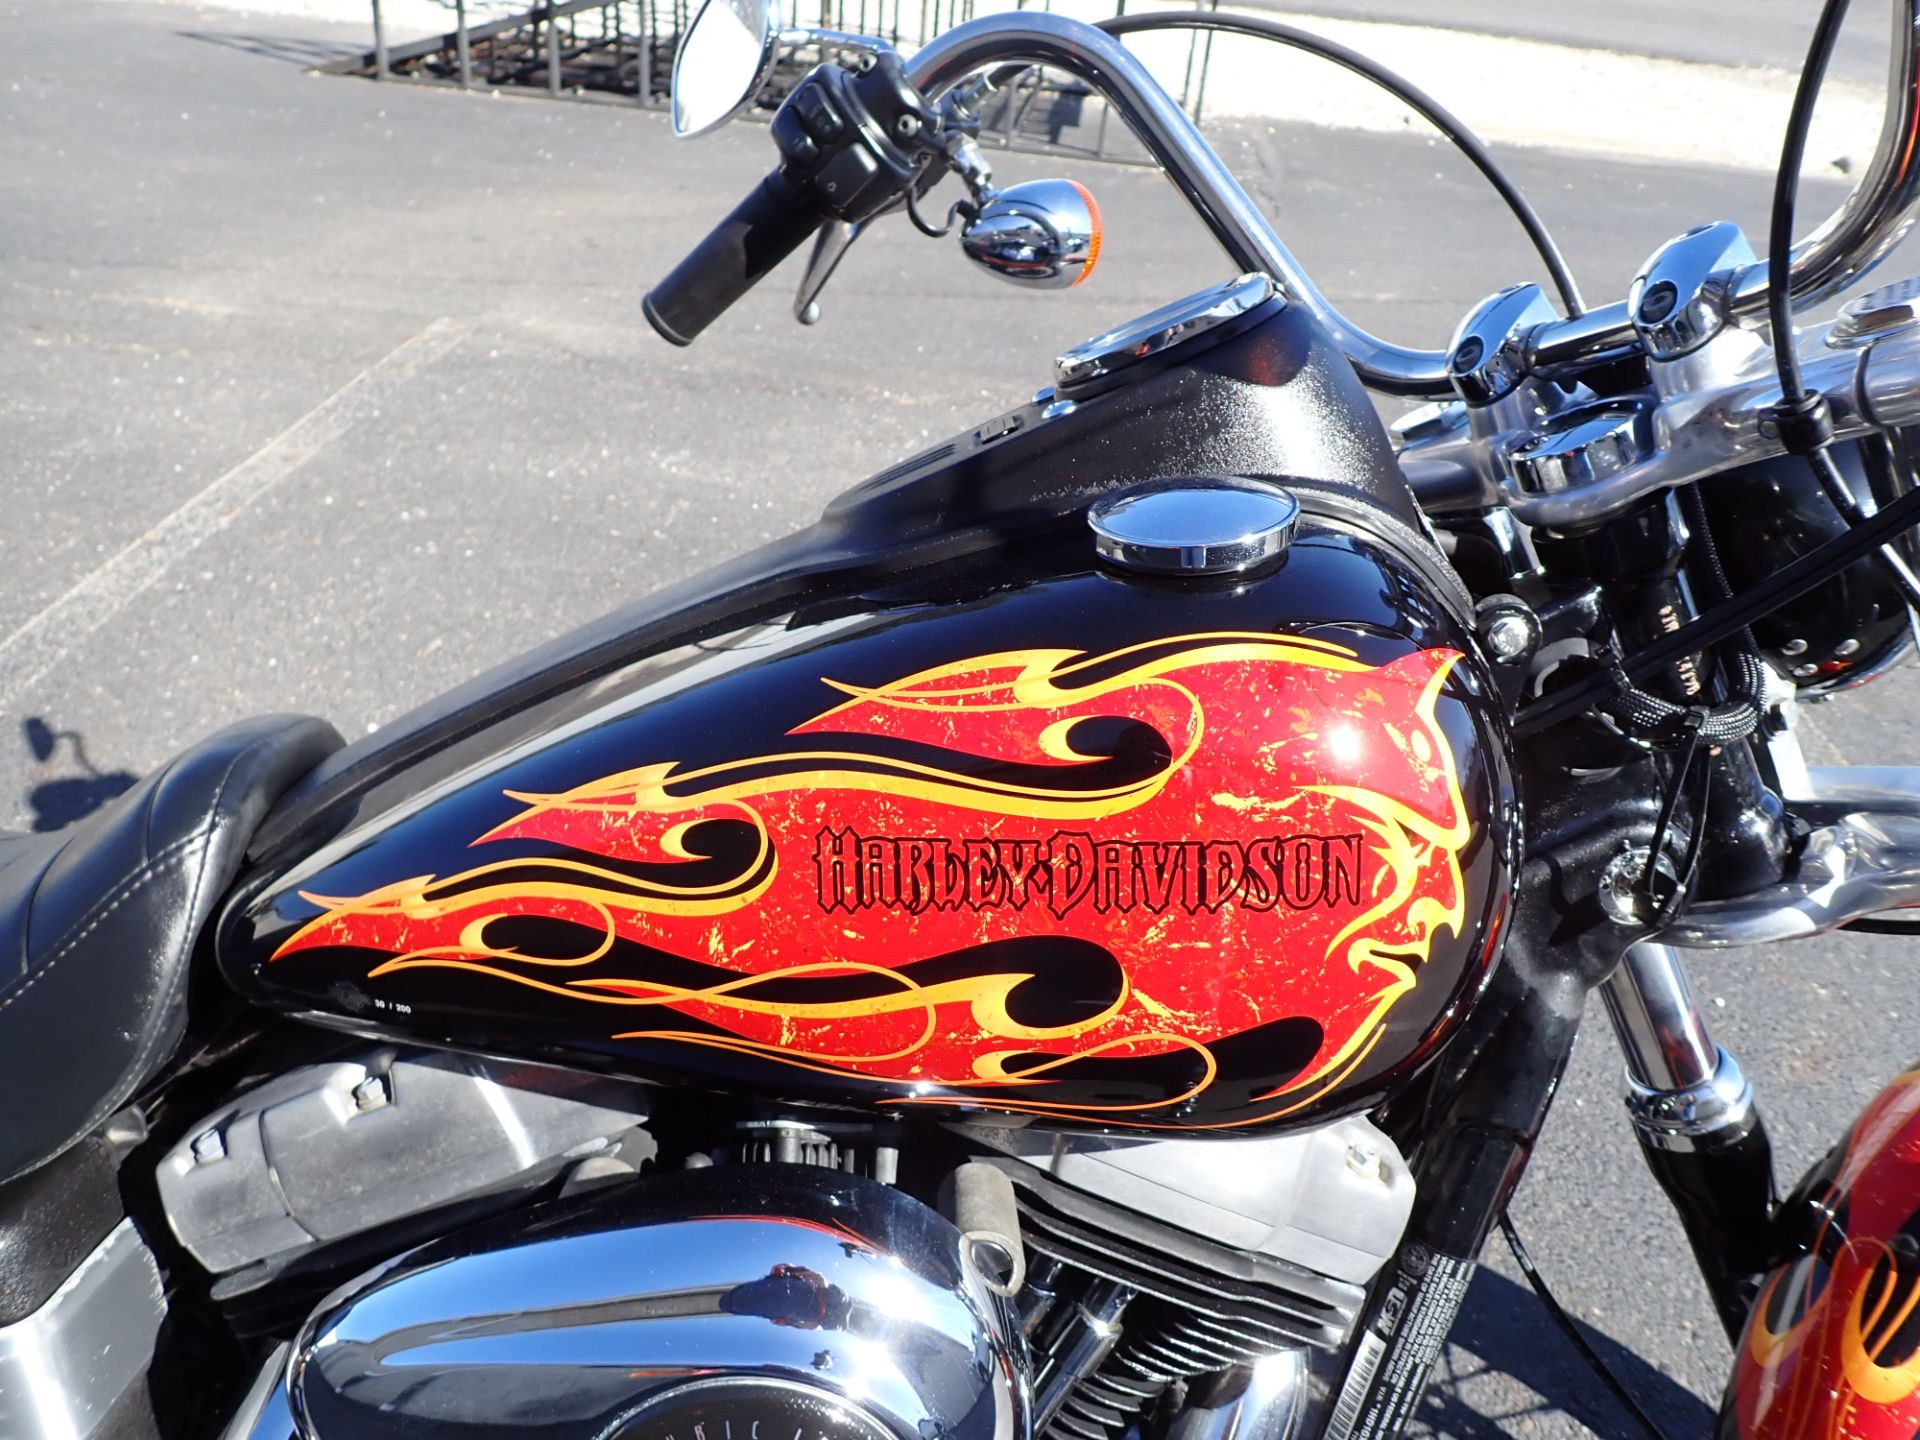 2011 Harley-Davidson Dyna® Street Bob® in Massillon, Ohio - Photo 3